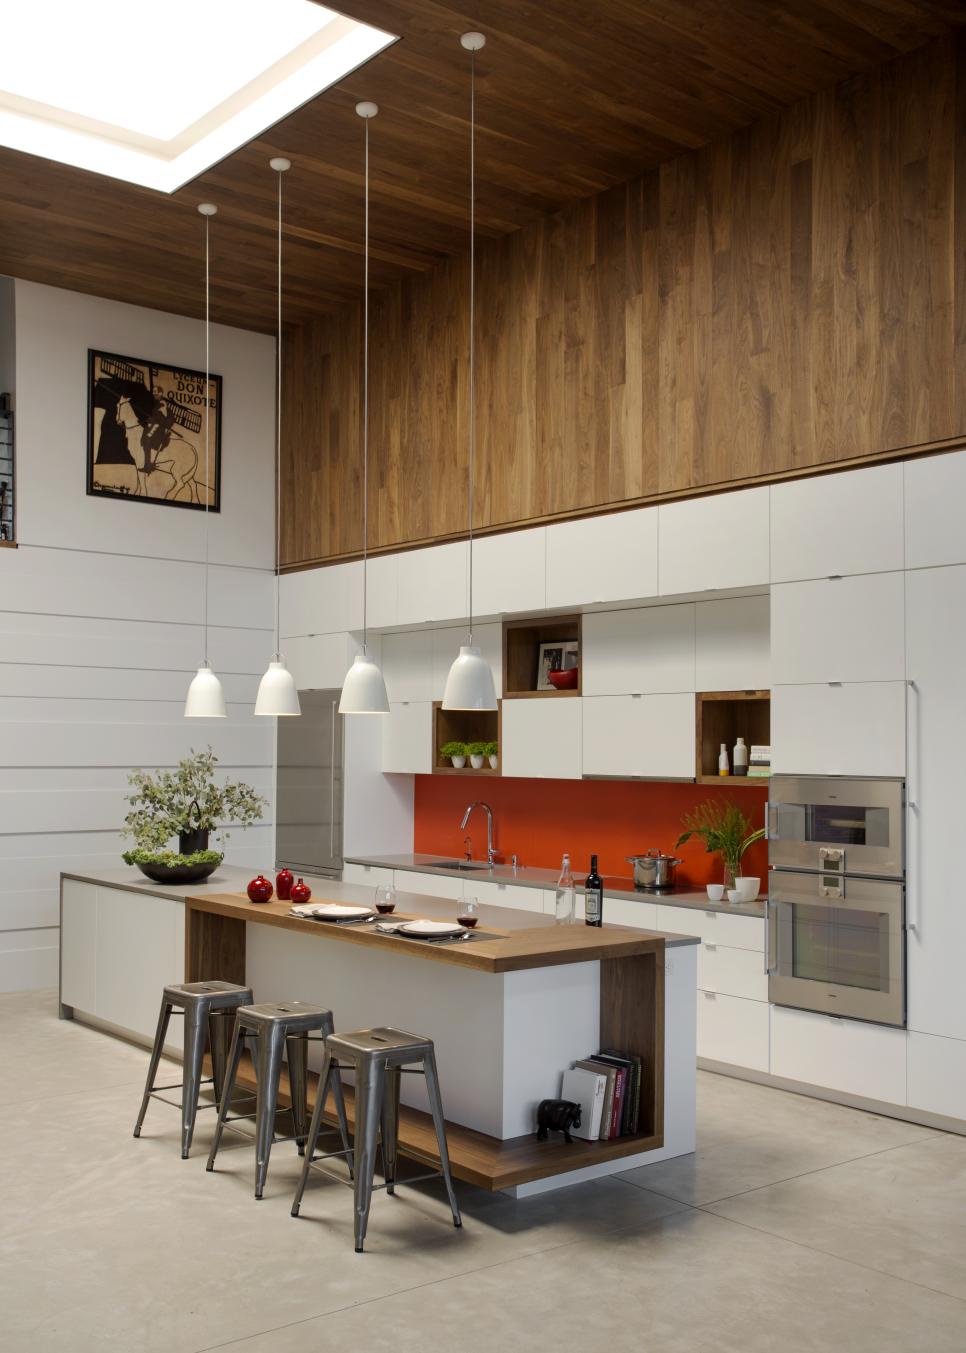 Modern Kitchen With Warm Wood Paneling | HGTV